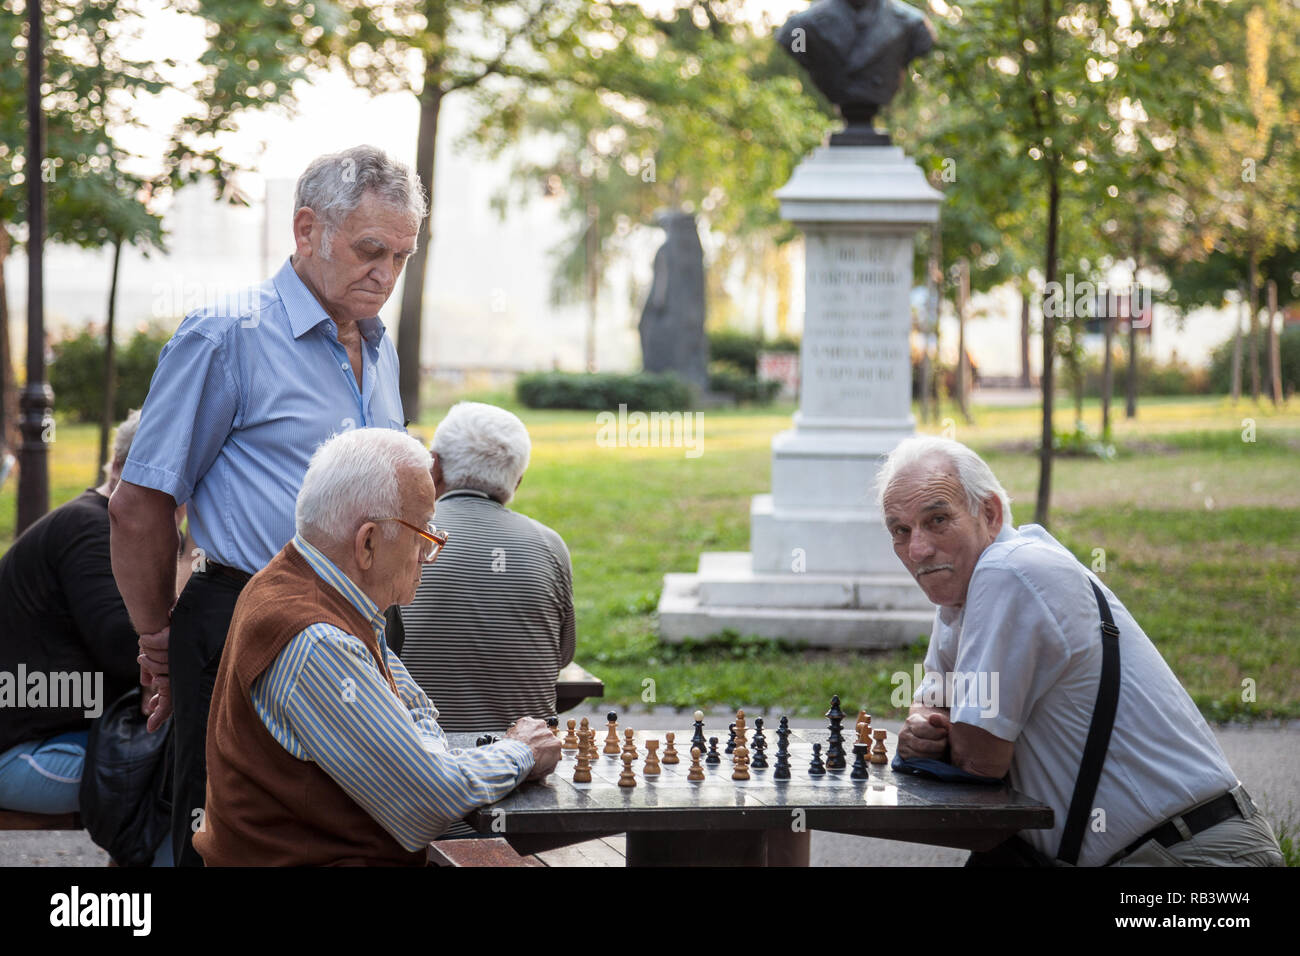 BELGRADE, SERBIA - JULY 11, 2018: Old senior men playing chess in a park of Kalemegdan fortress, in Belgrade, Serbia. Kalemegdan is one of the main la Stock Photo